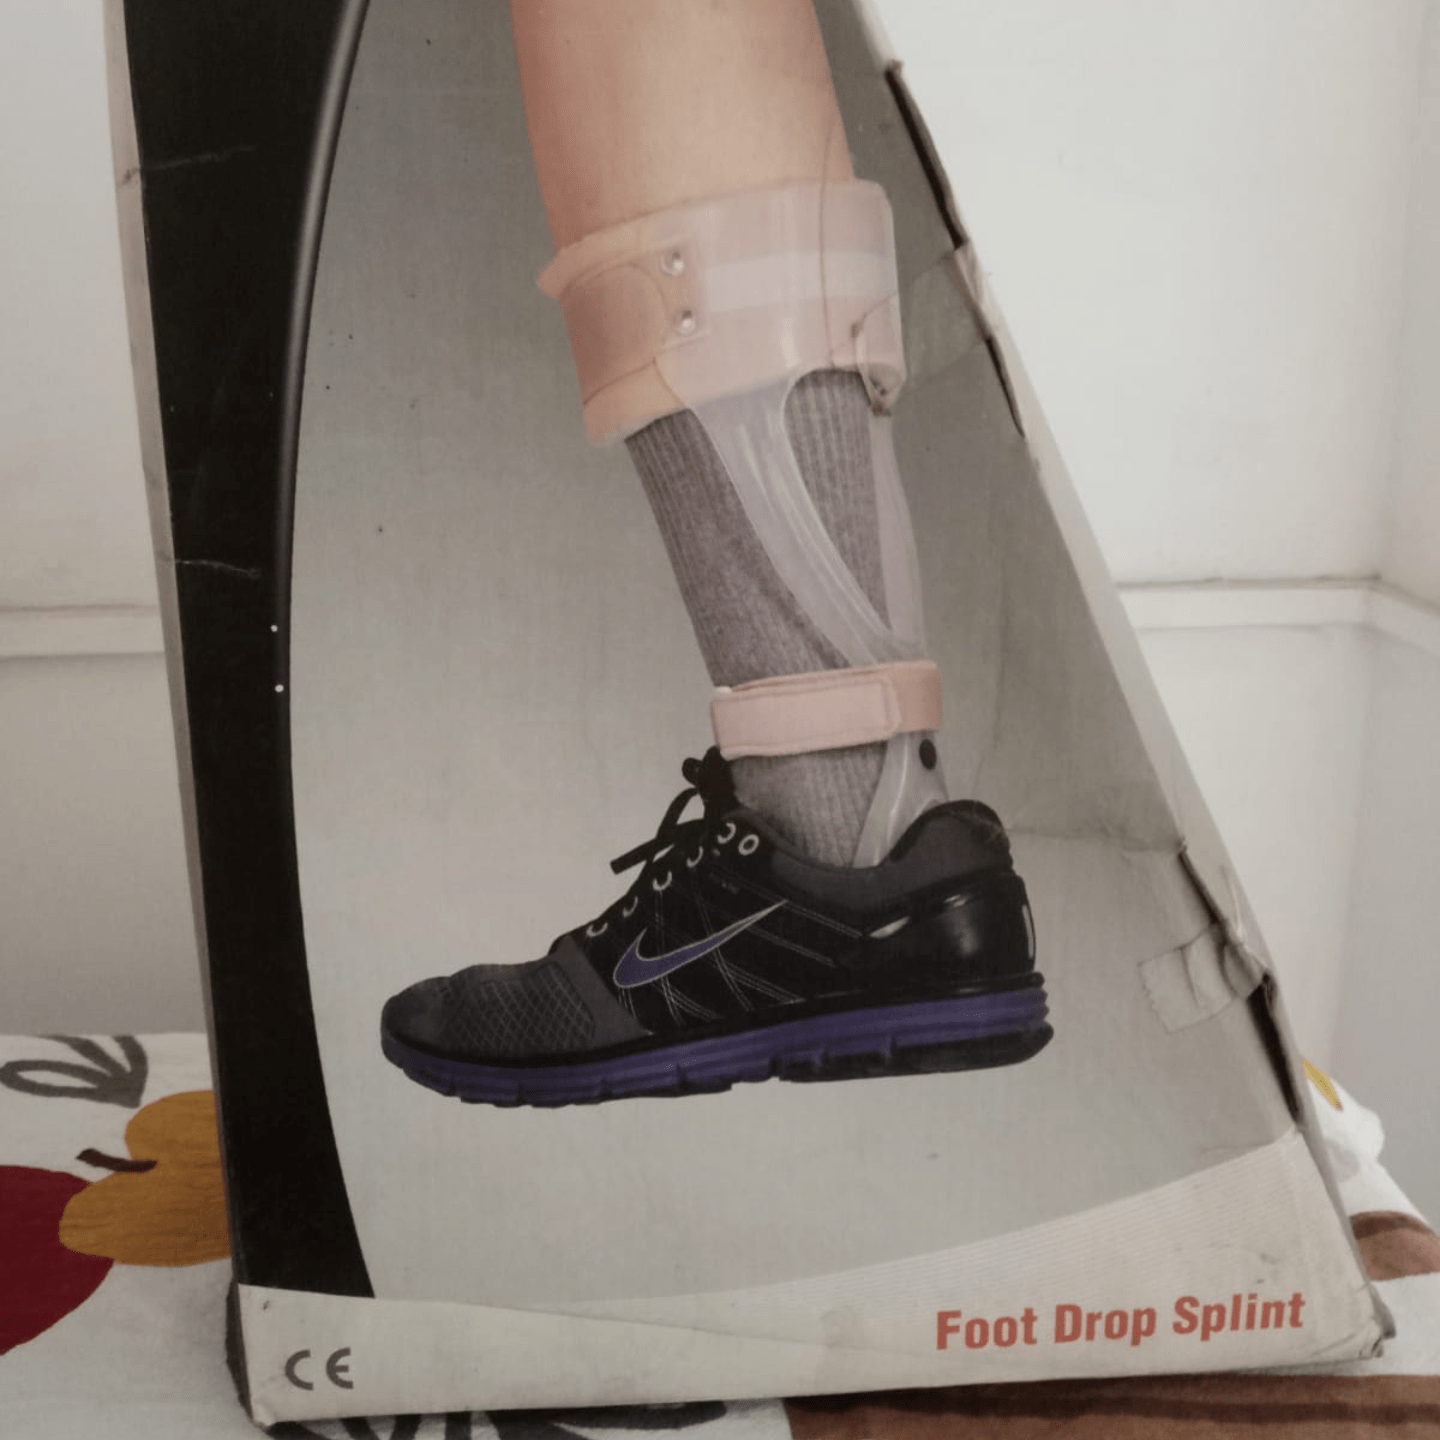 Foot Drop Splint